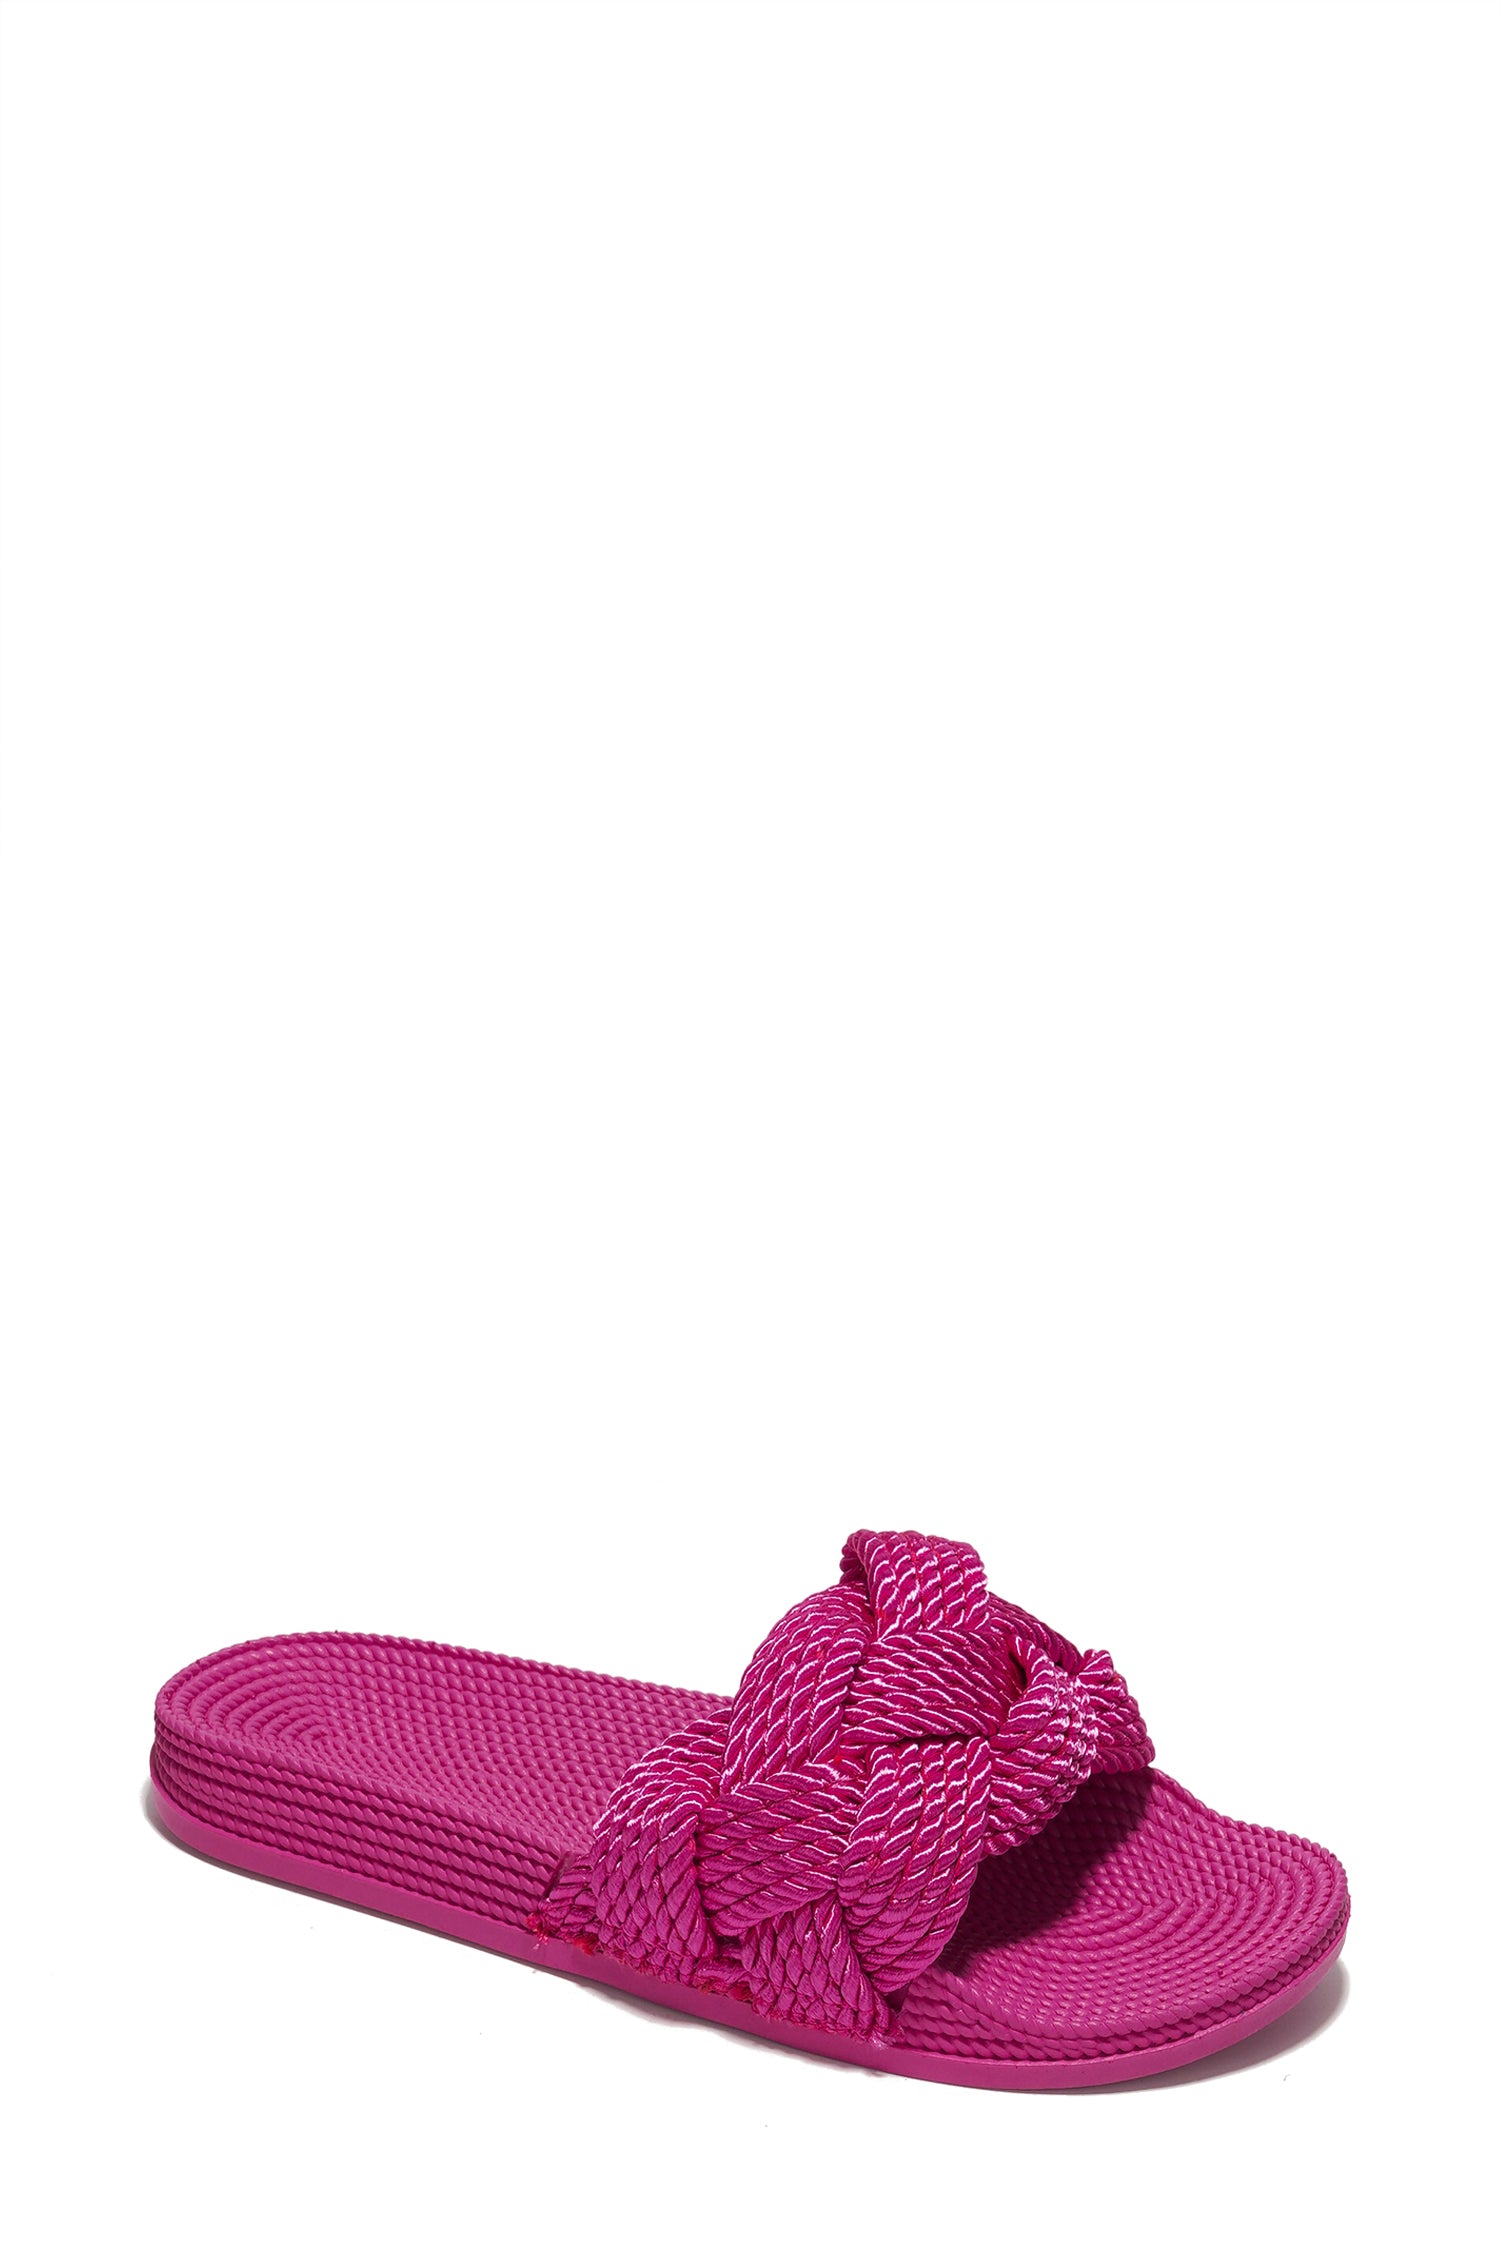 UrbanOG - Annissa Rope Knot Slide Sandals - SANDALS